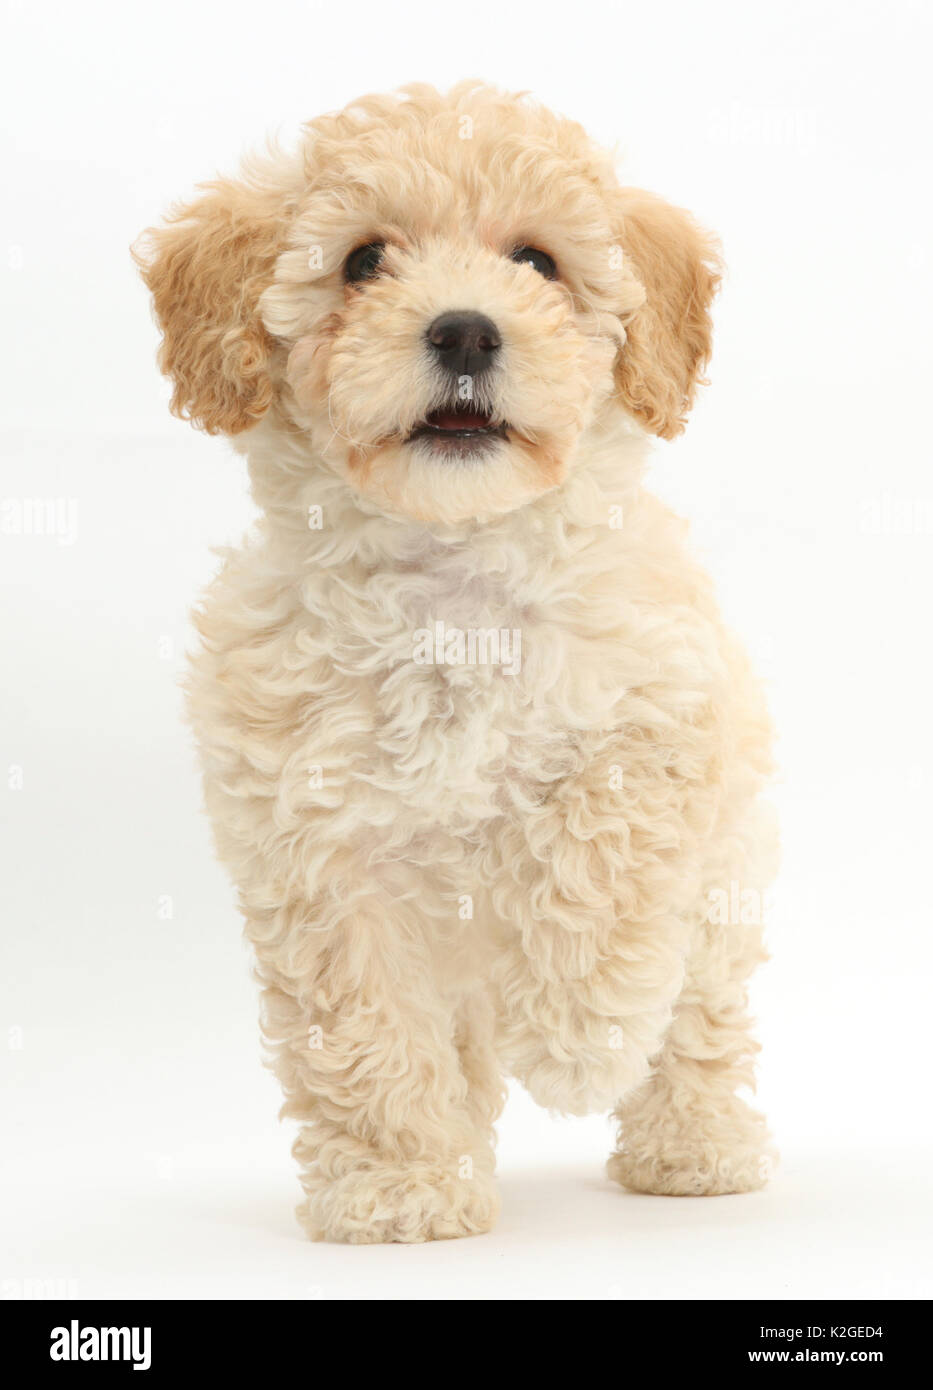 Poochon puppy, Bichon Frise cross Poodle, age 6 weeks. Stock Photo